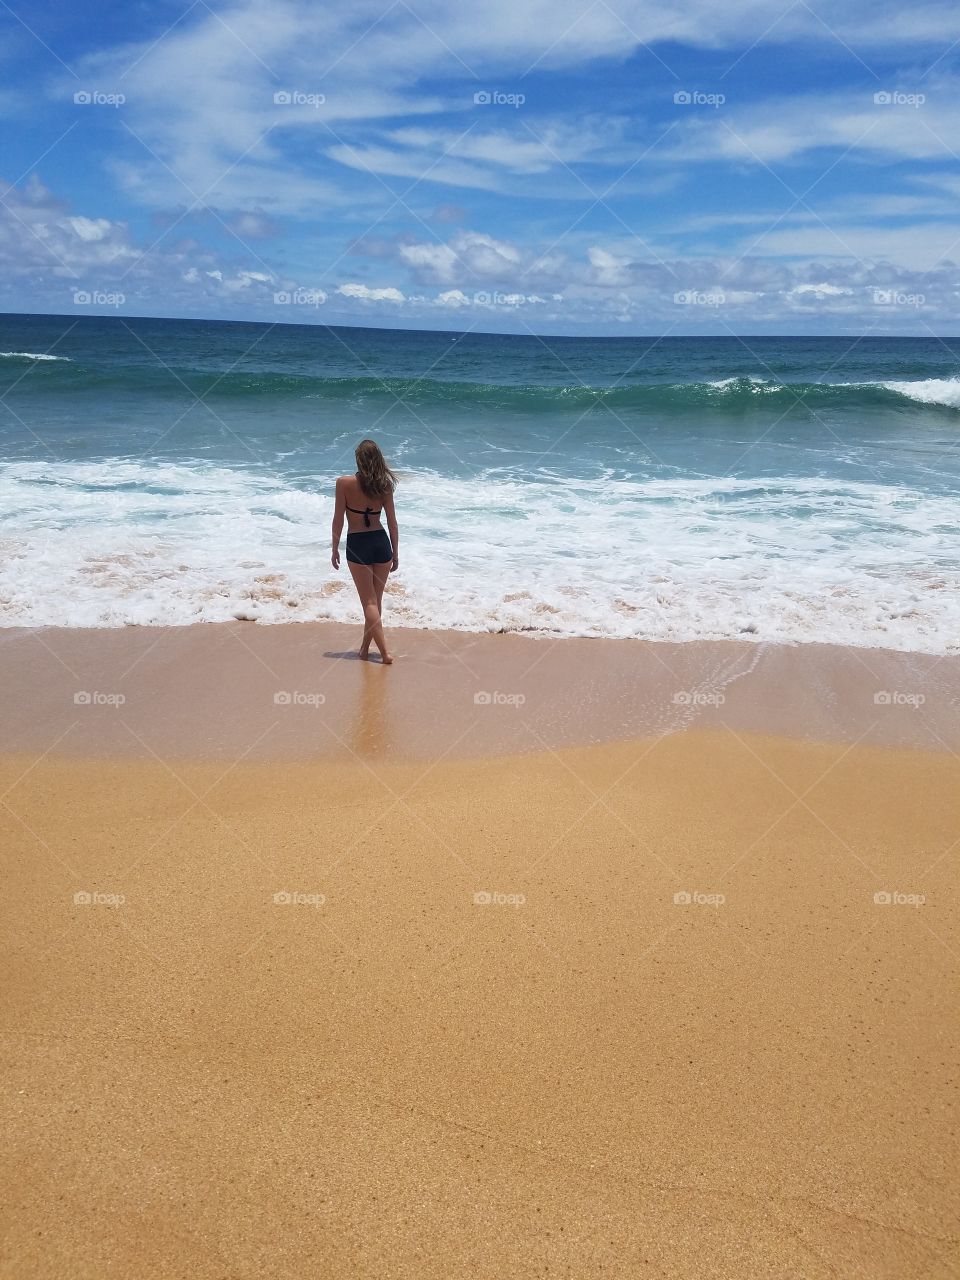 girl on beach shoreline